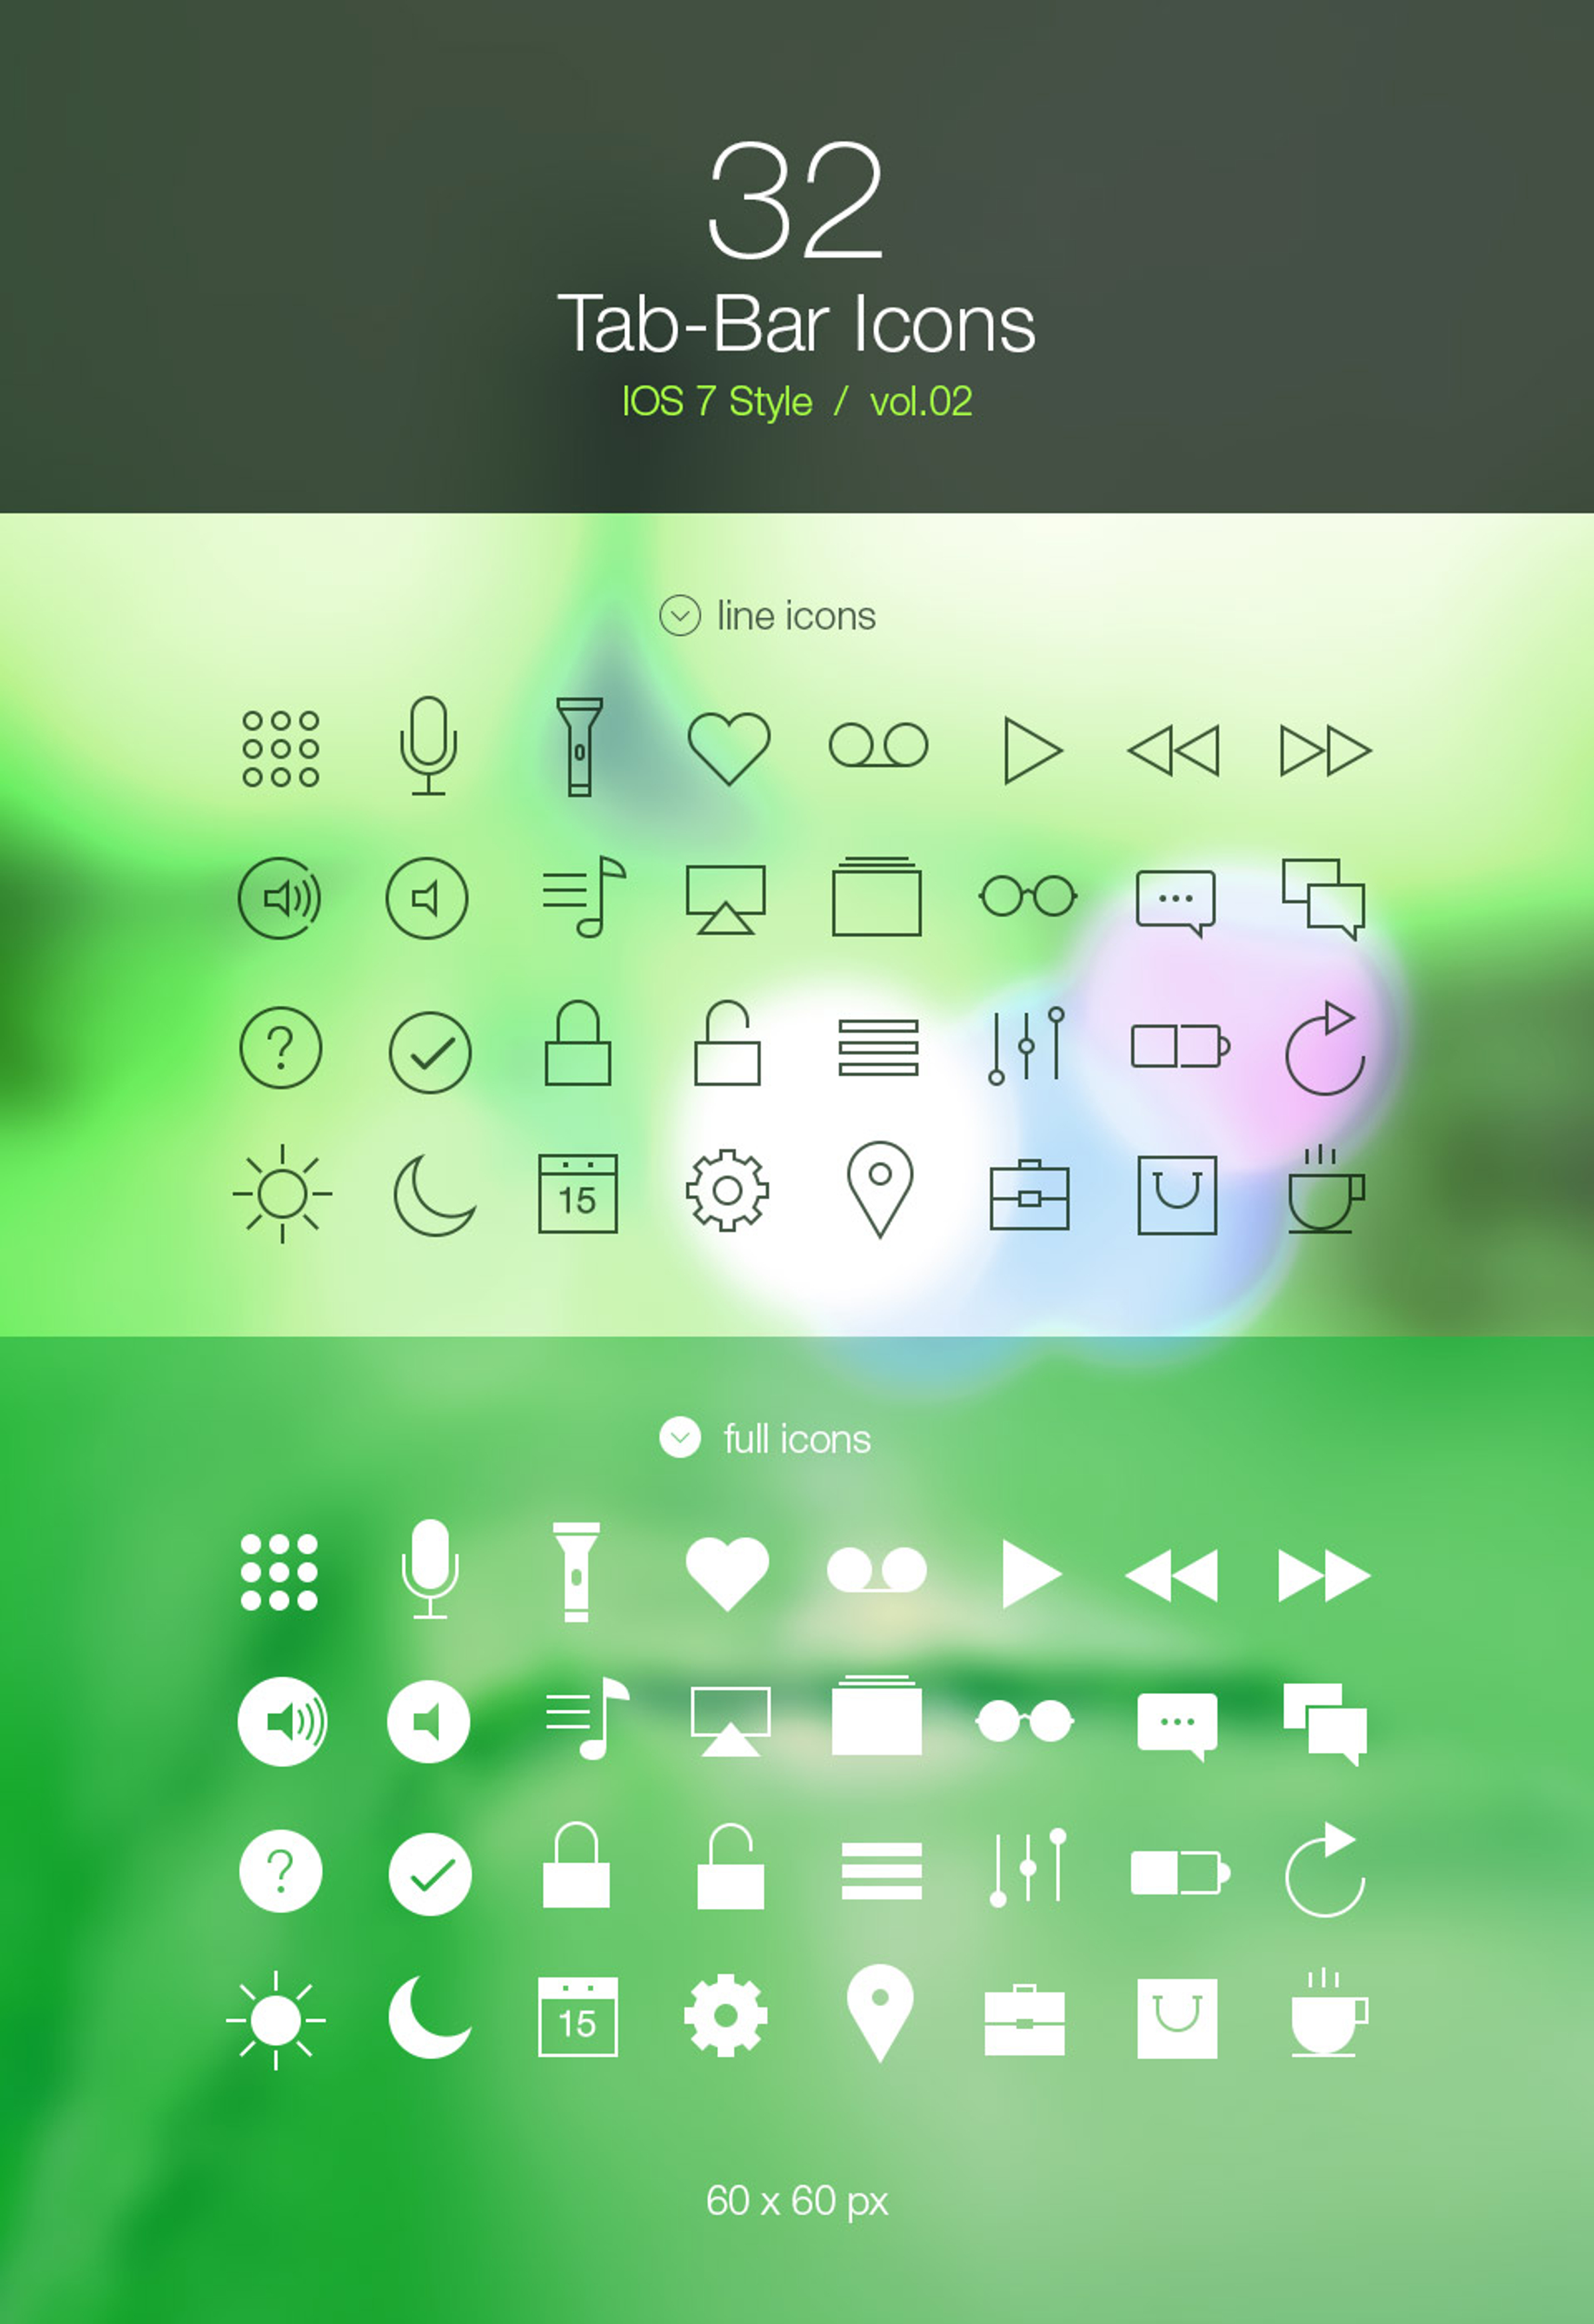 ios7 flat icons